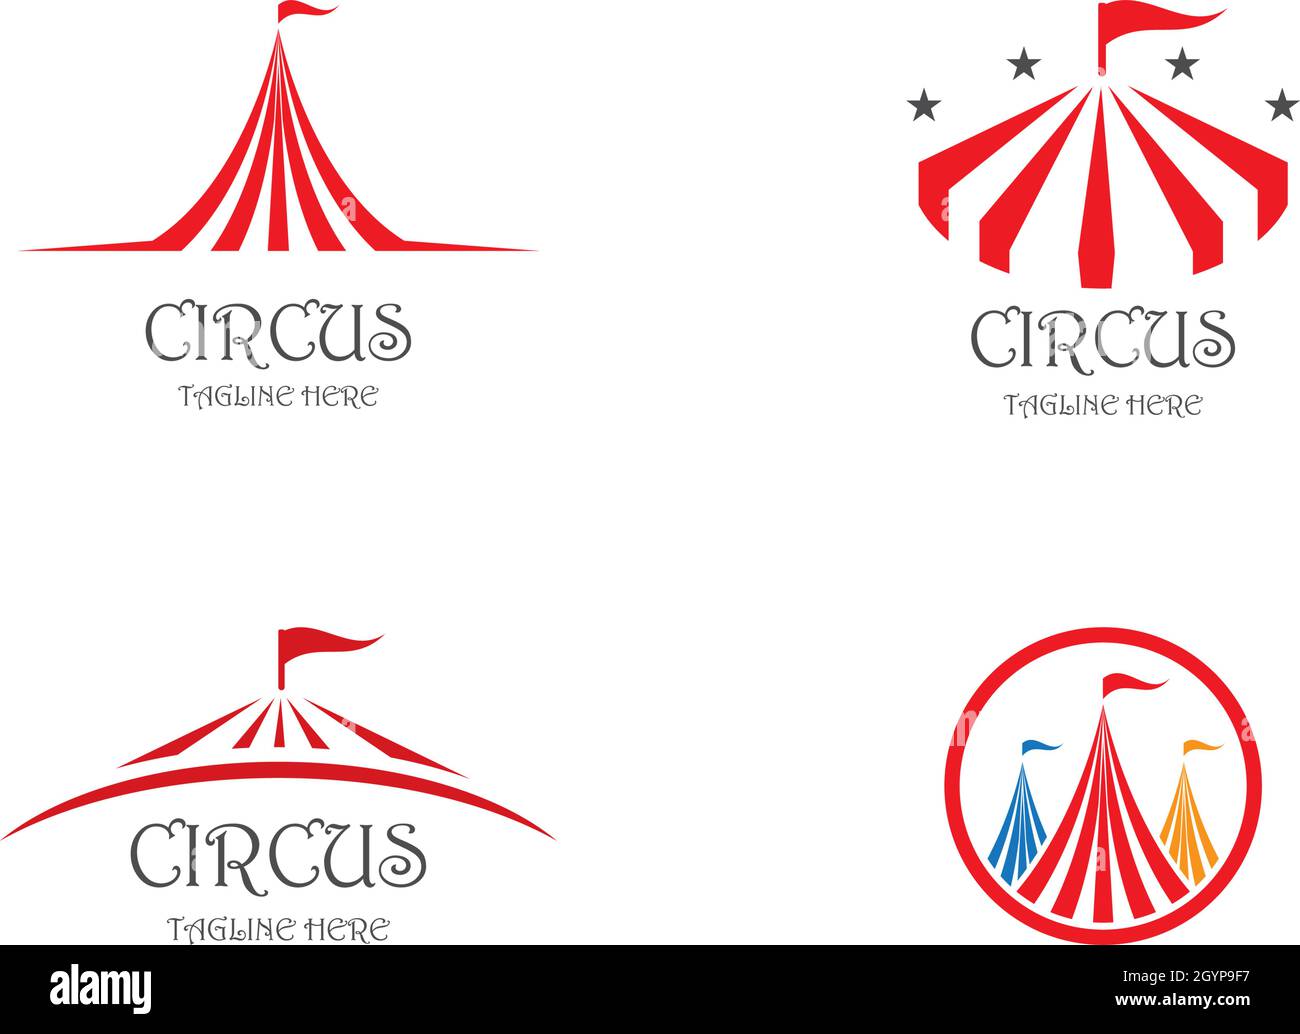 Vorlage für das Circus-Logo. Vektorgrafik Stock Vektor